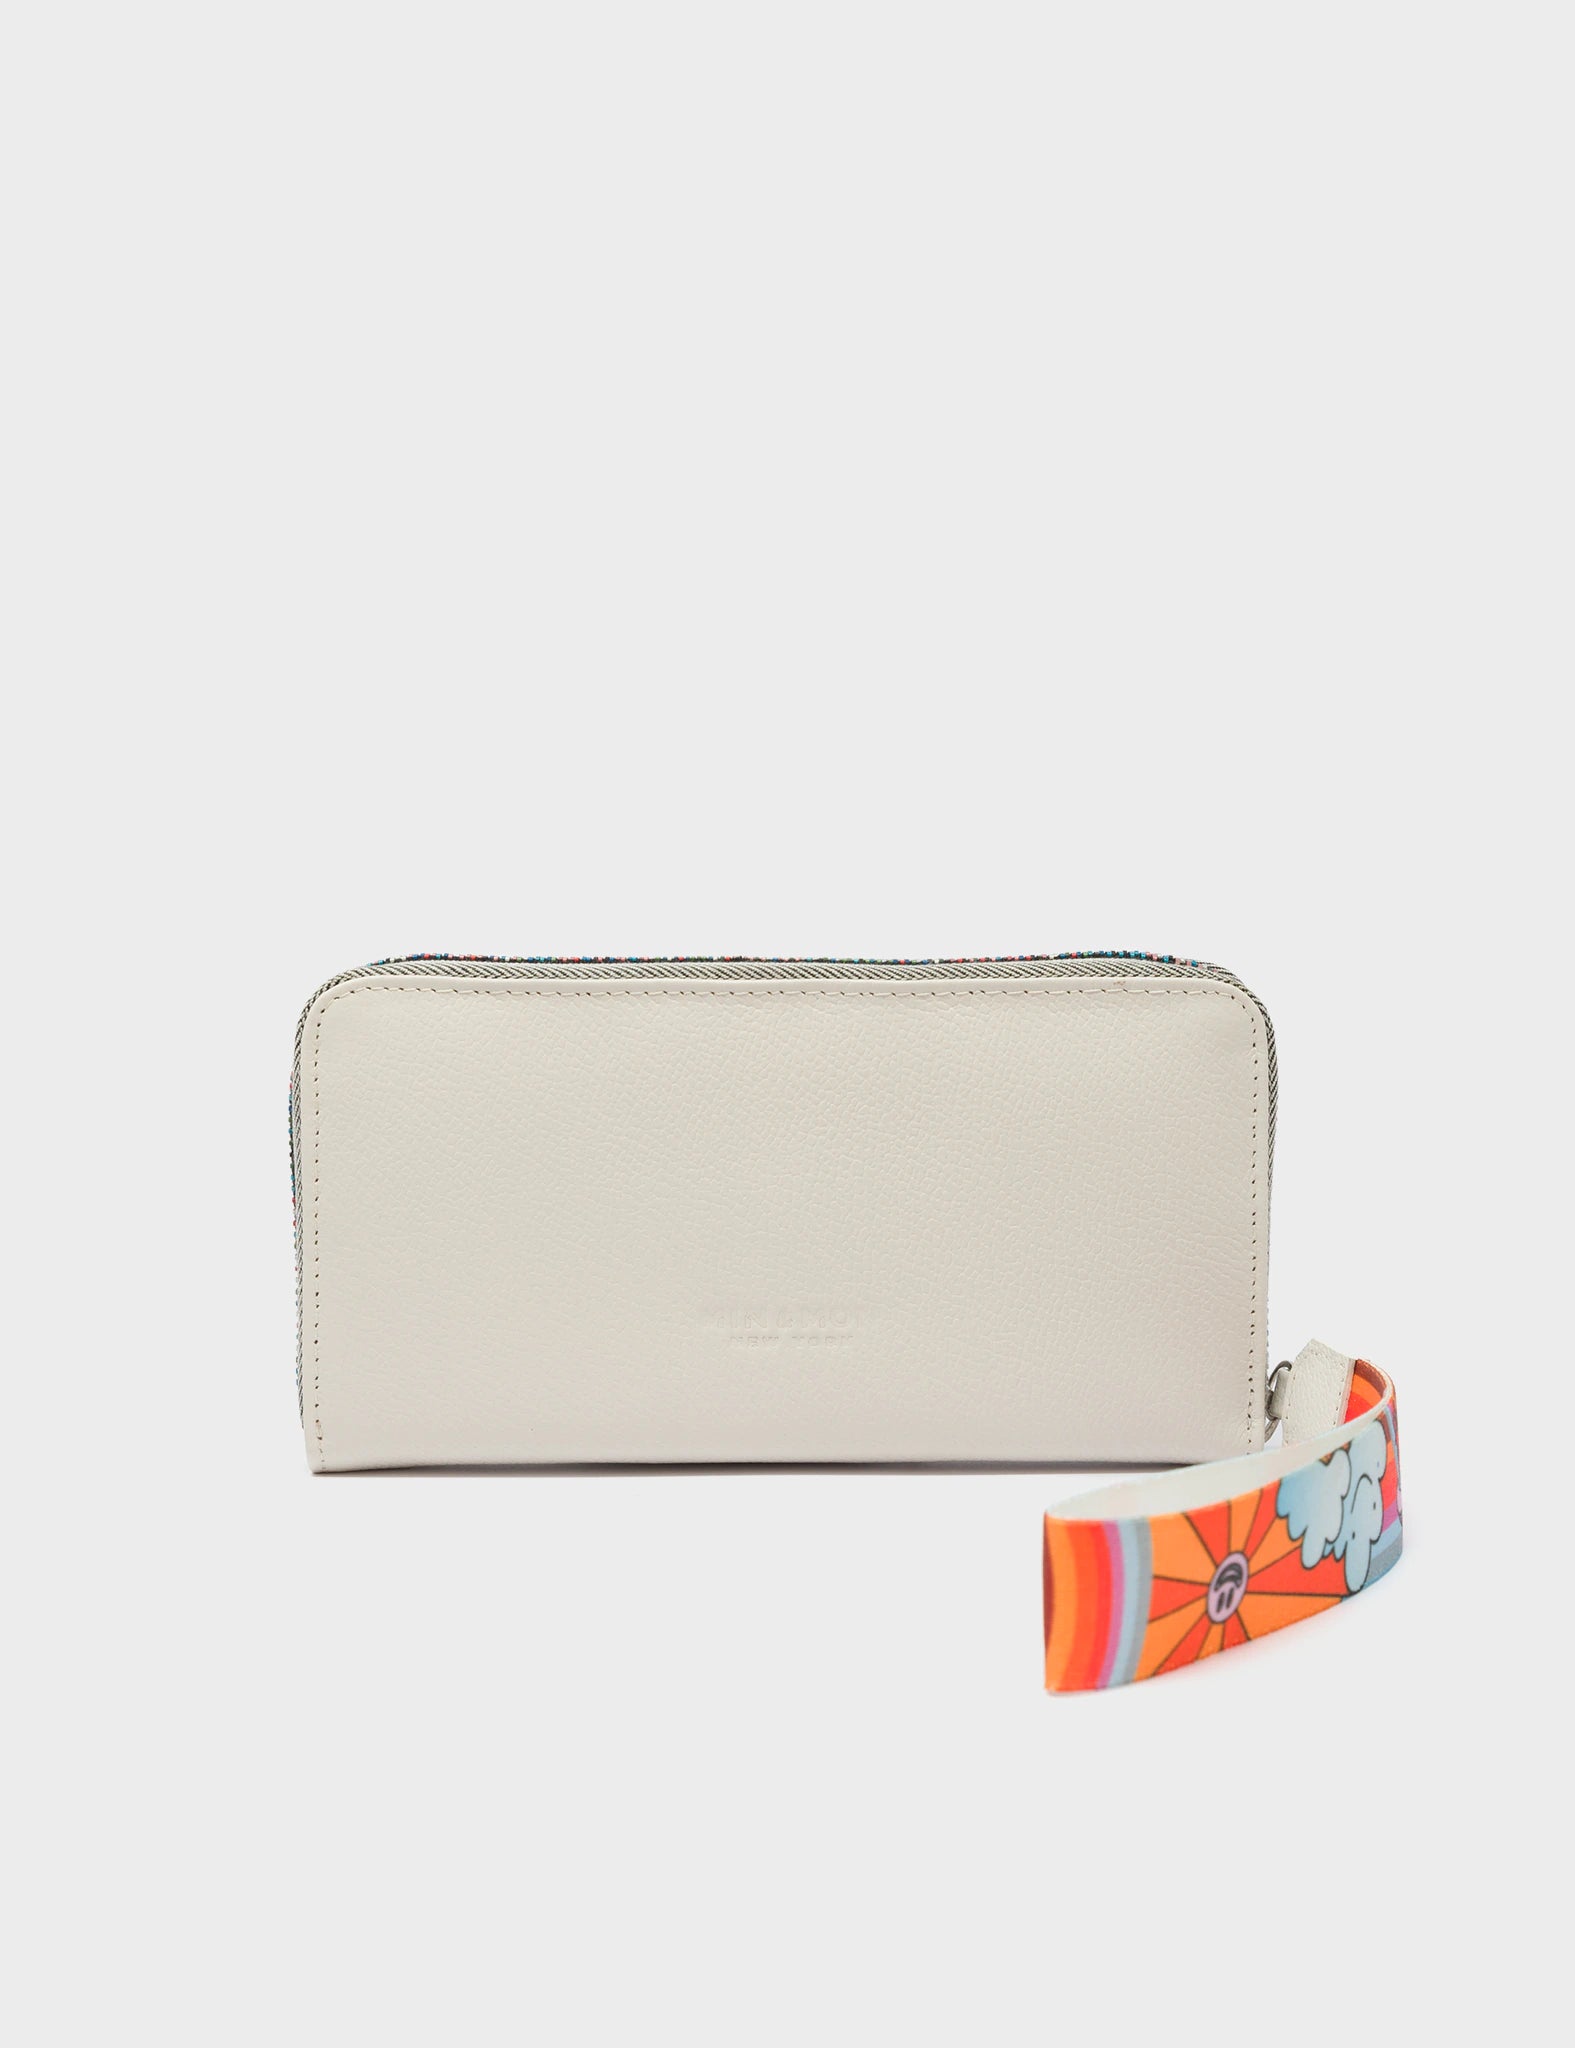 Francis Cream Leather Wallet - Groovy Rainbow Design - back 